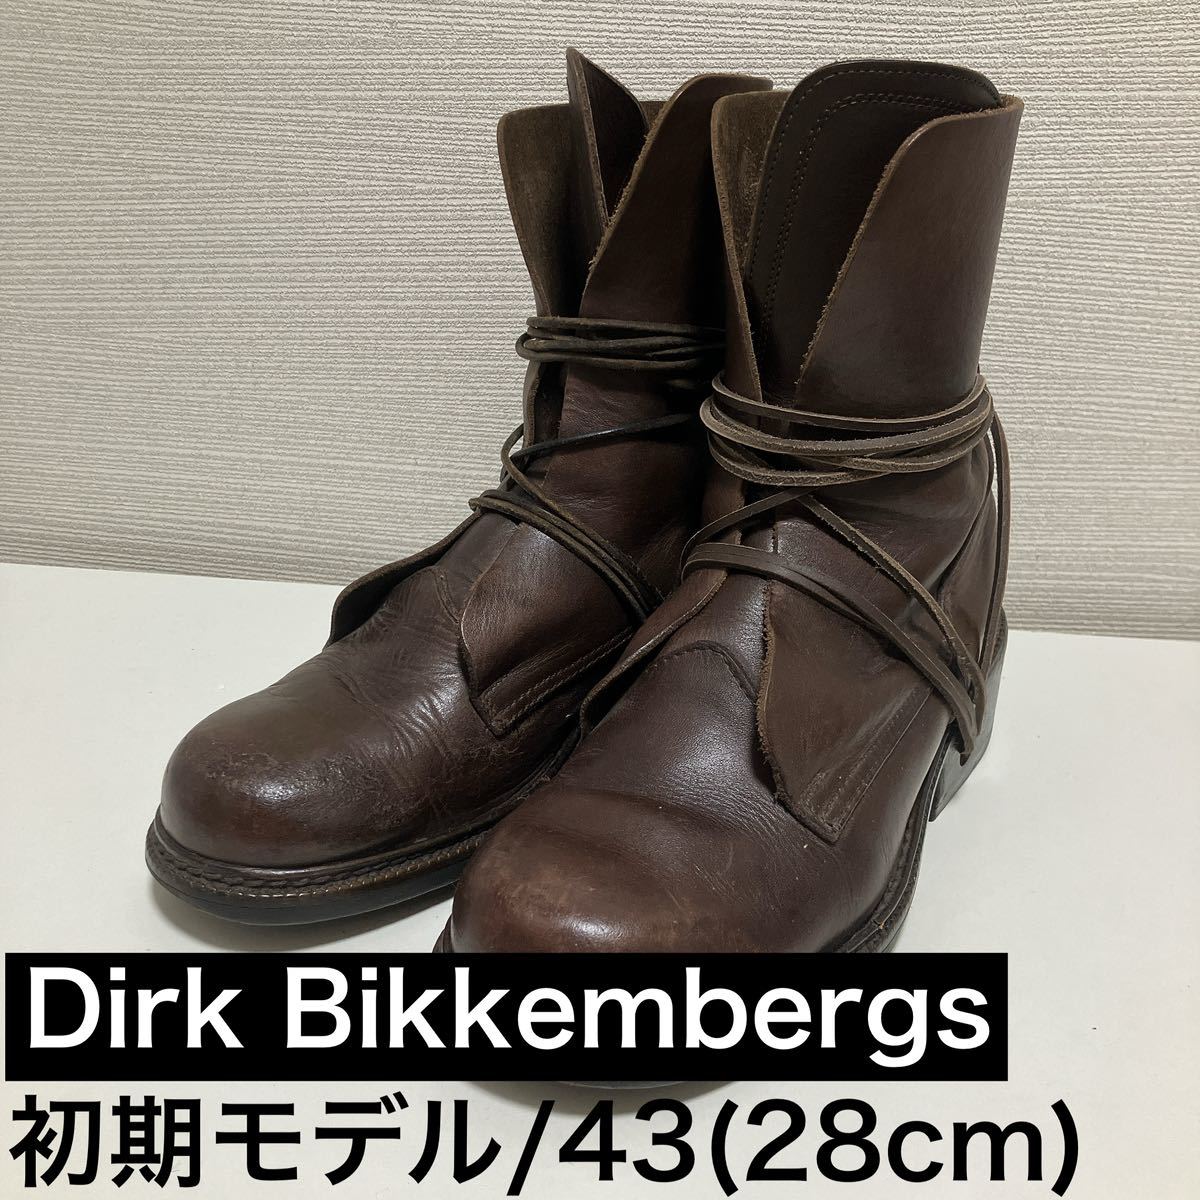 Yahoo!オークション -「dirk bikkembergs ブーツ」(ブーツ) (メンズ 